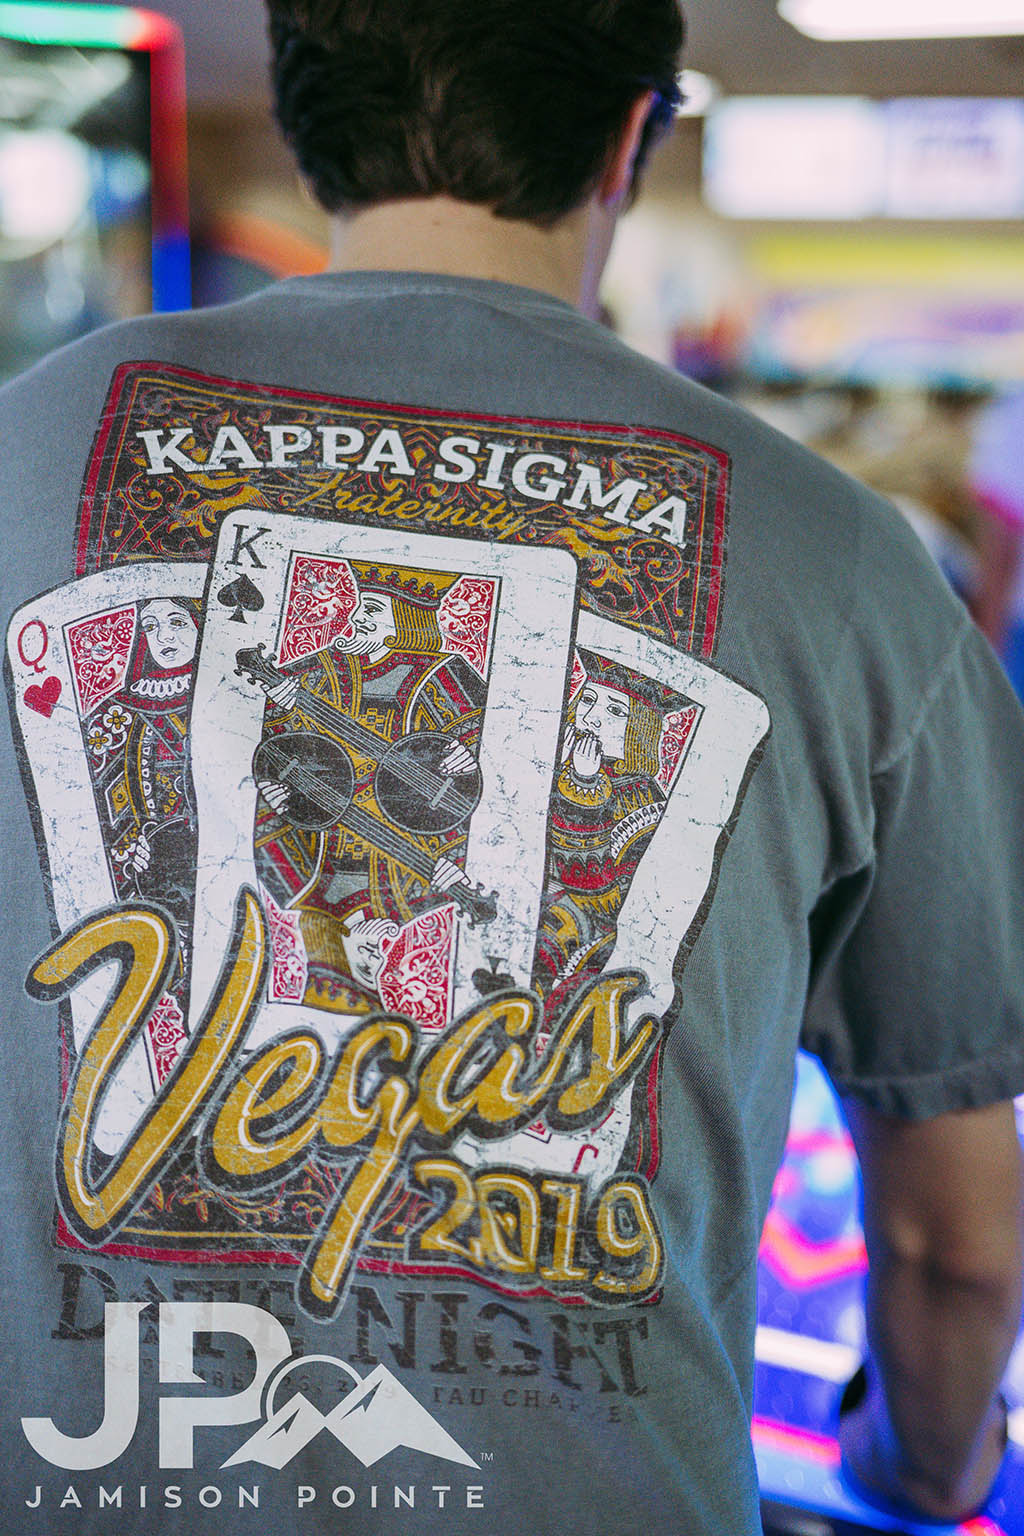 Custom Kappa Sigma Shirts - Fraternity T-Shirts